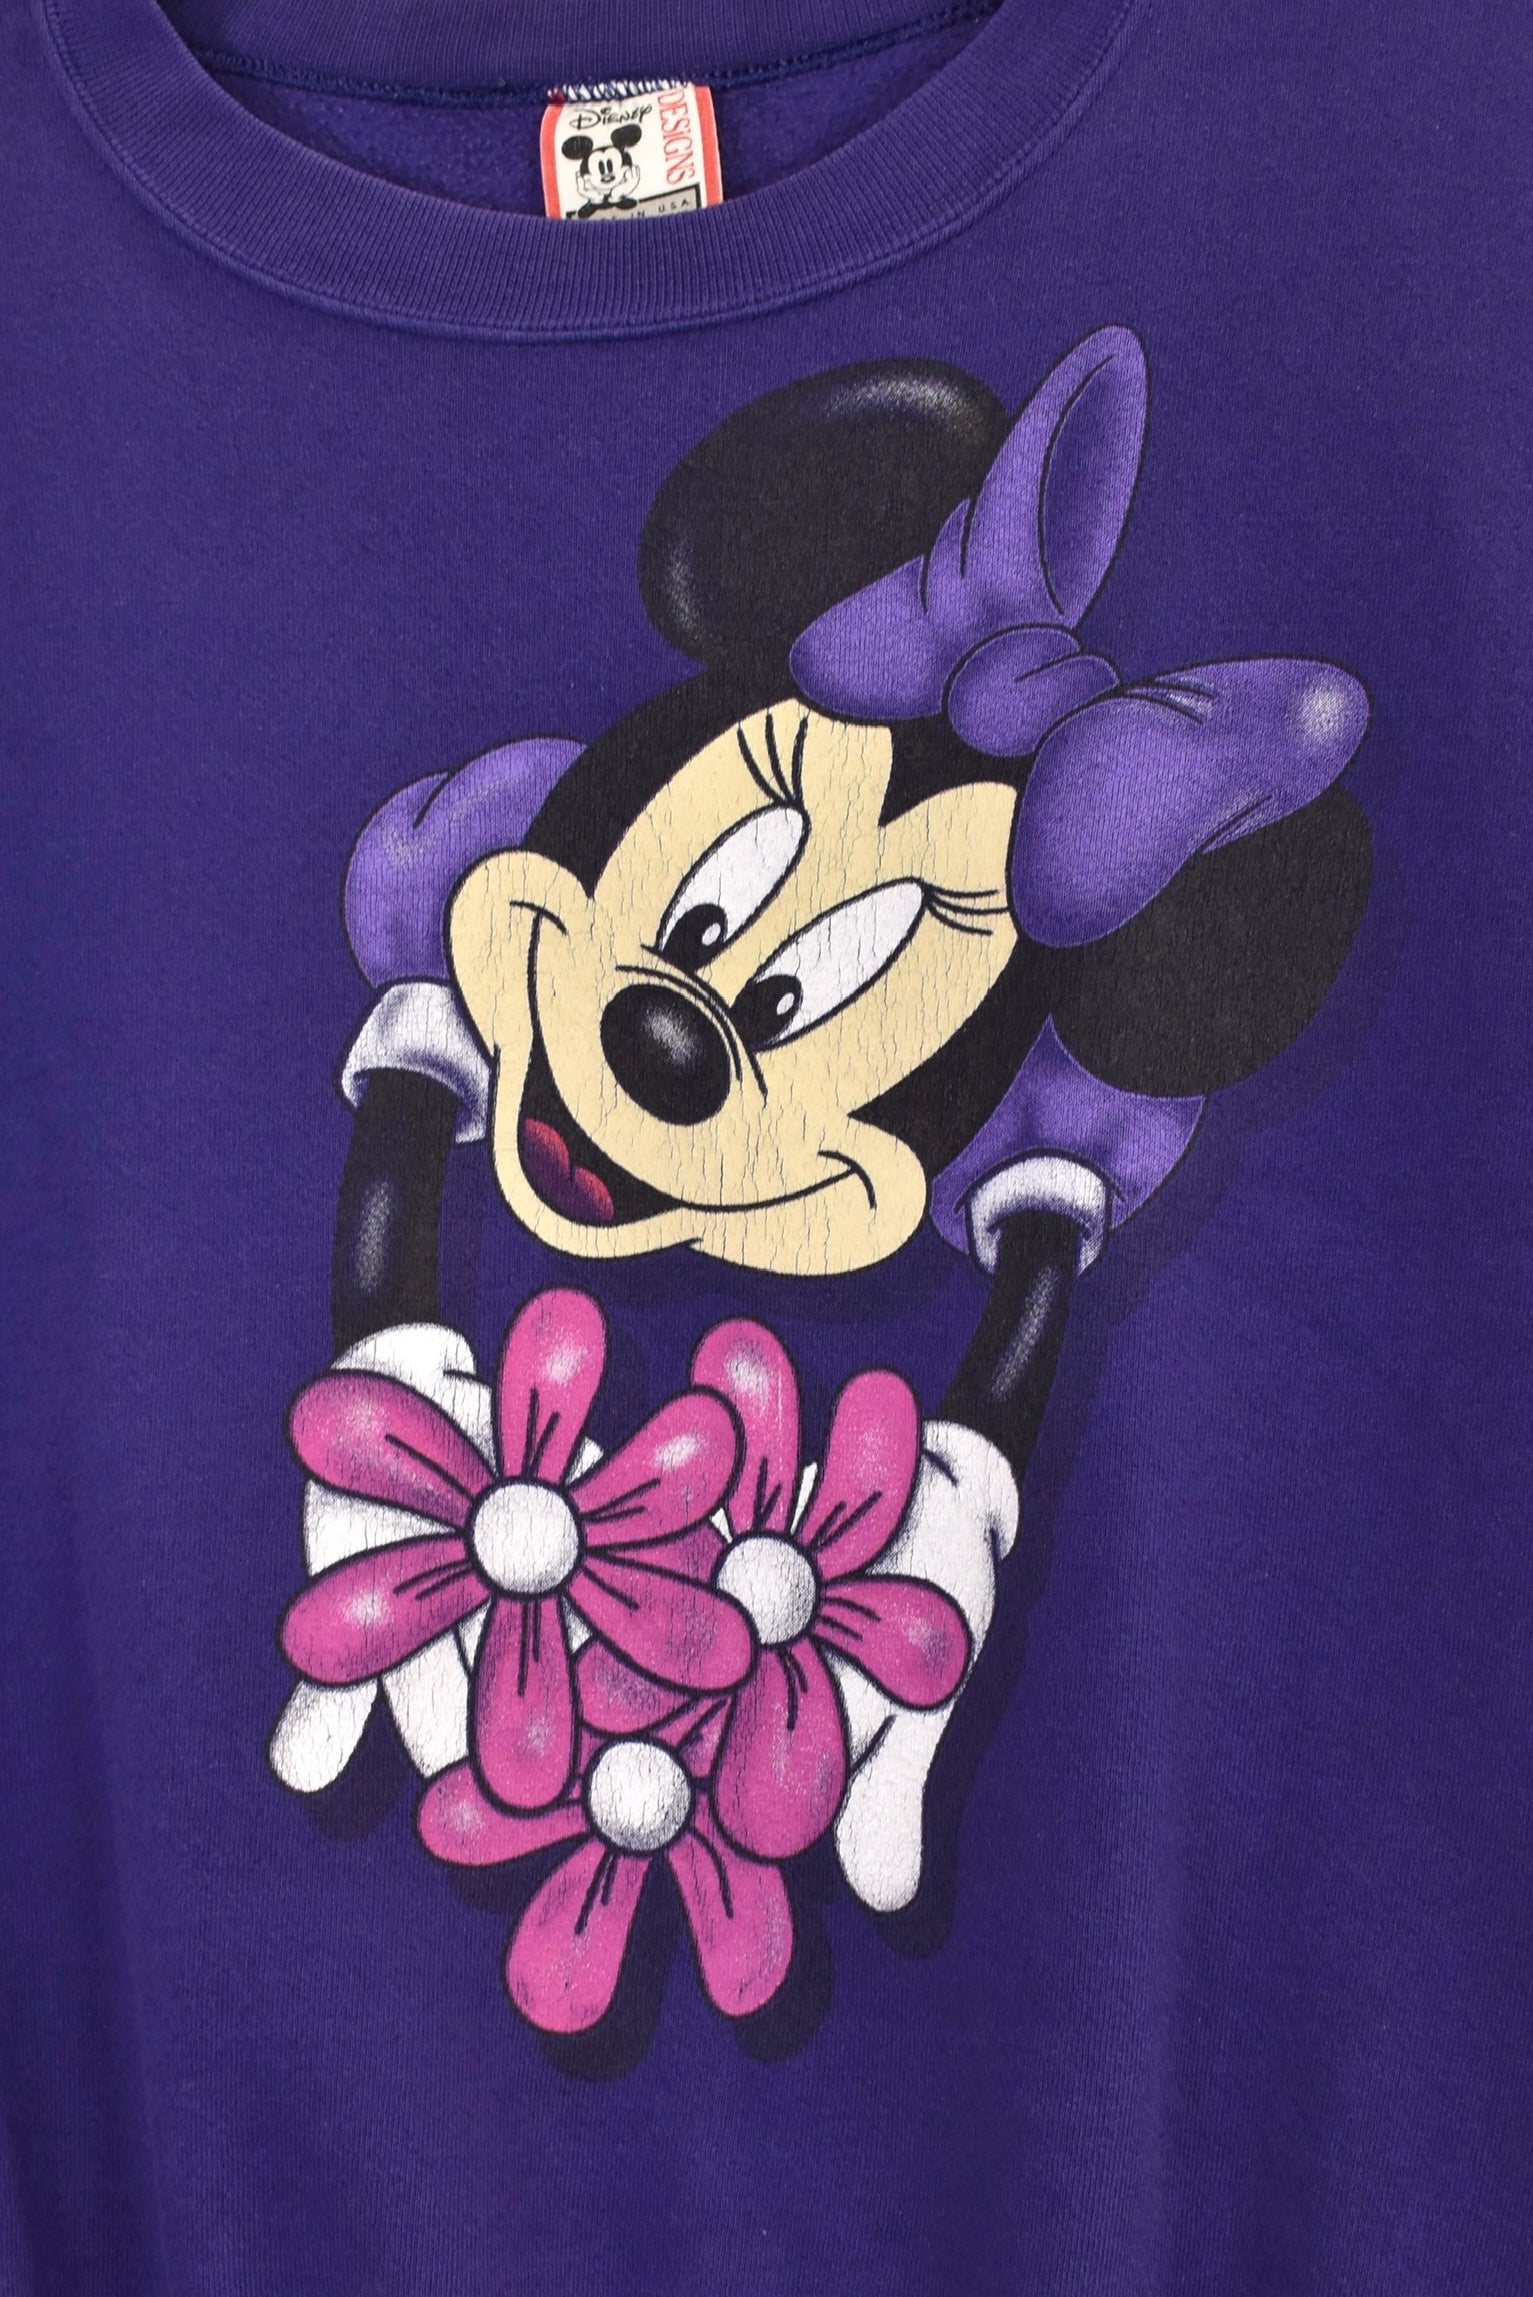 Vintage Minnie Mouse sweatshirt (M), purple Disney graphic crewneck